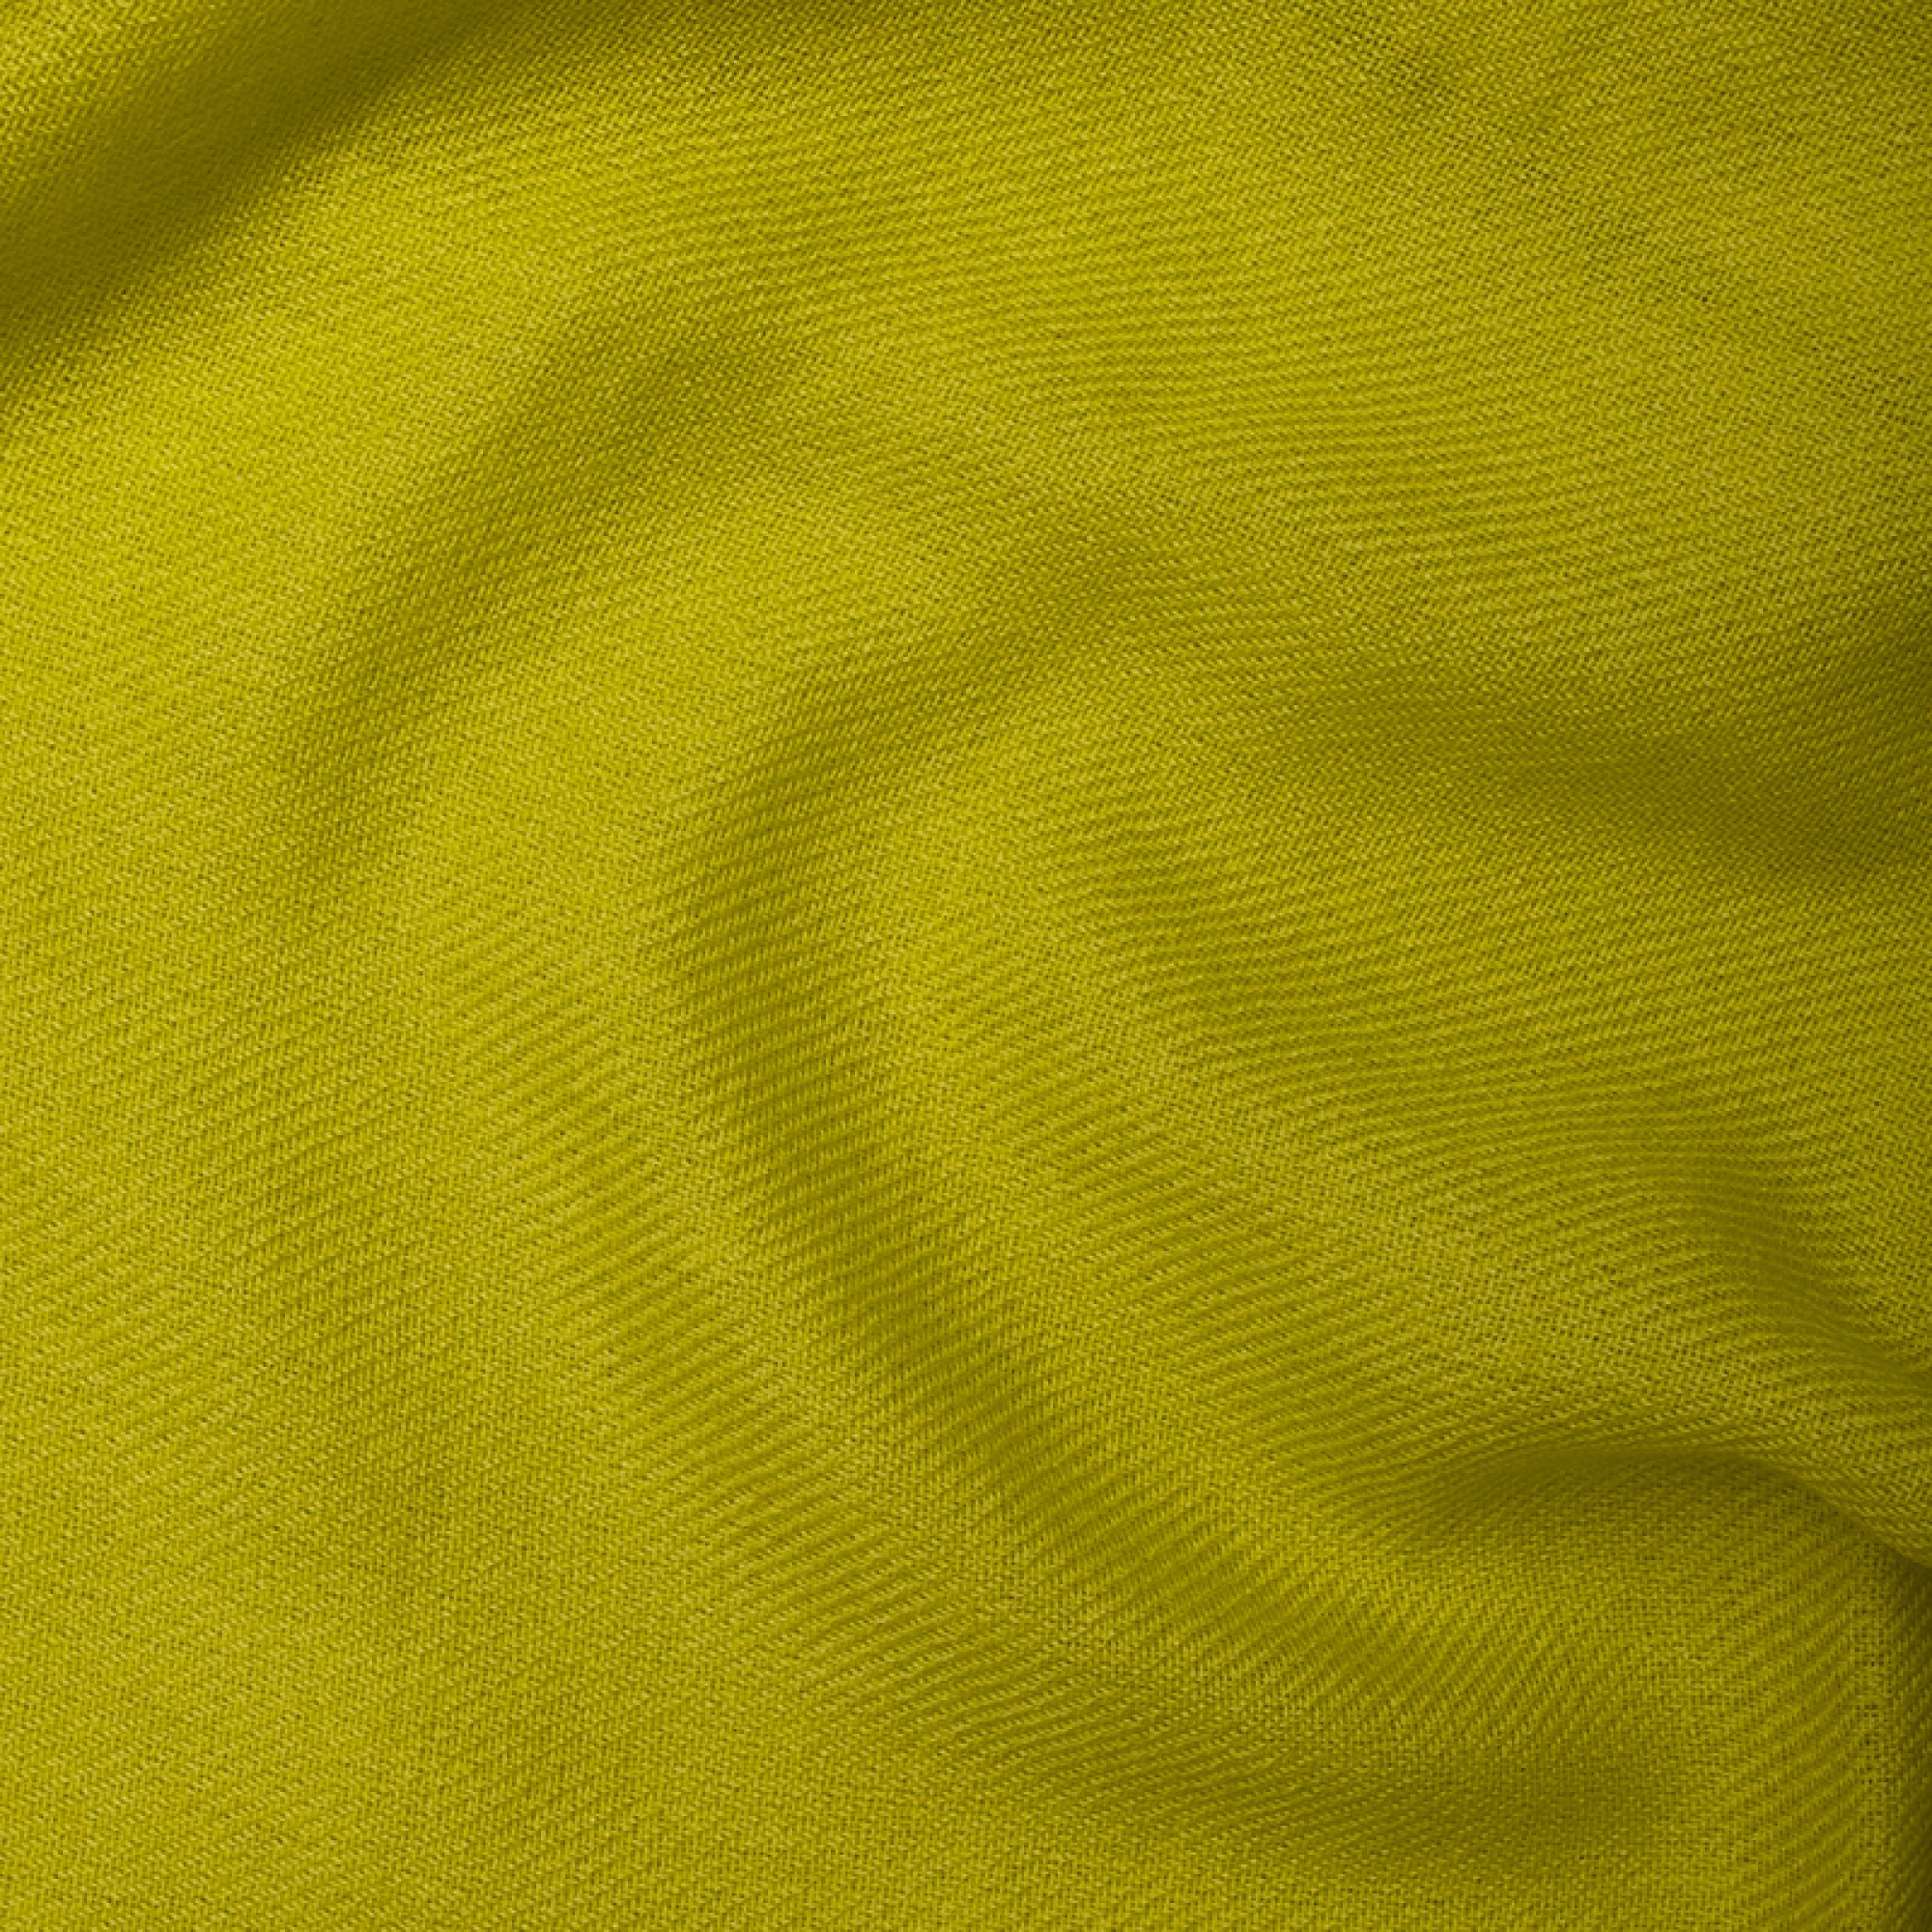 Cachemire pull femme toodoo plain s 140 x 200 vert sulfureux 140 x 200 cm